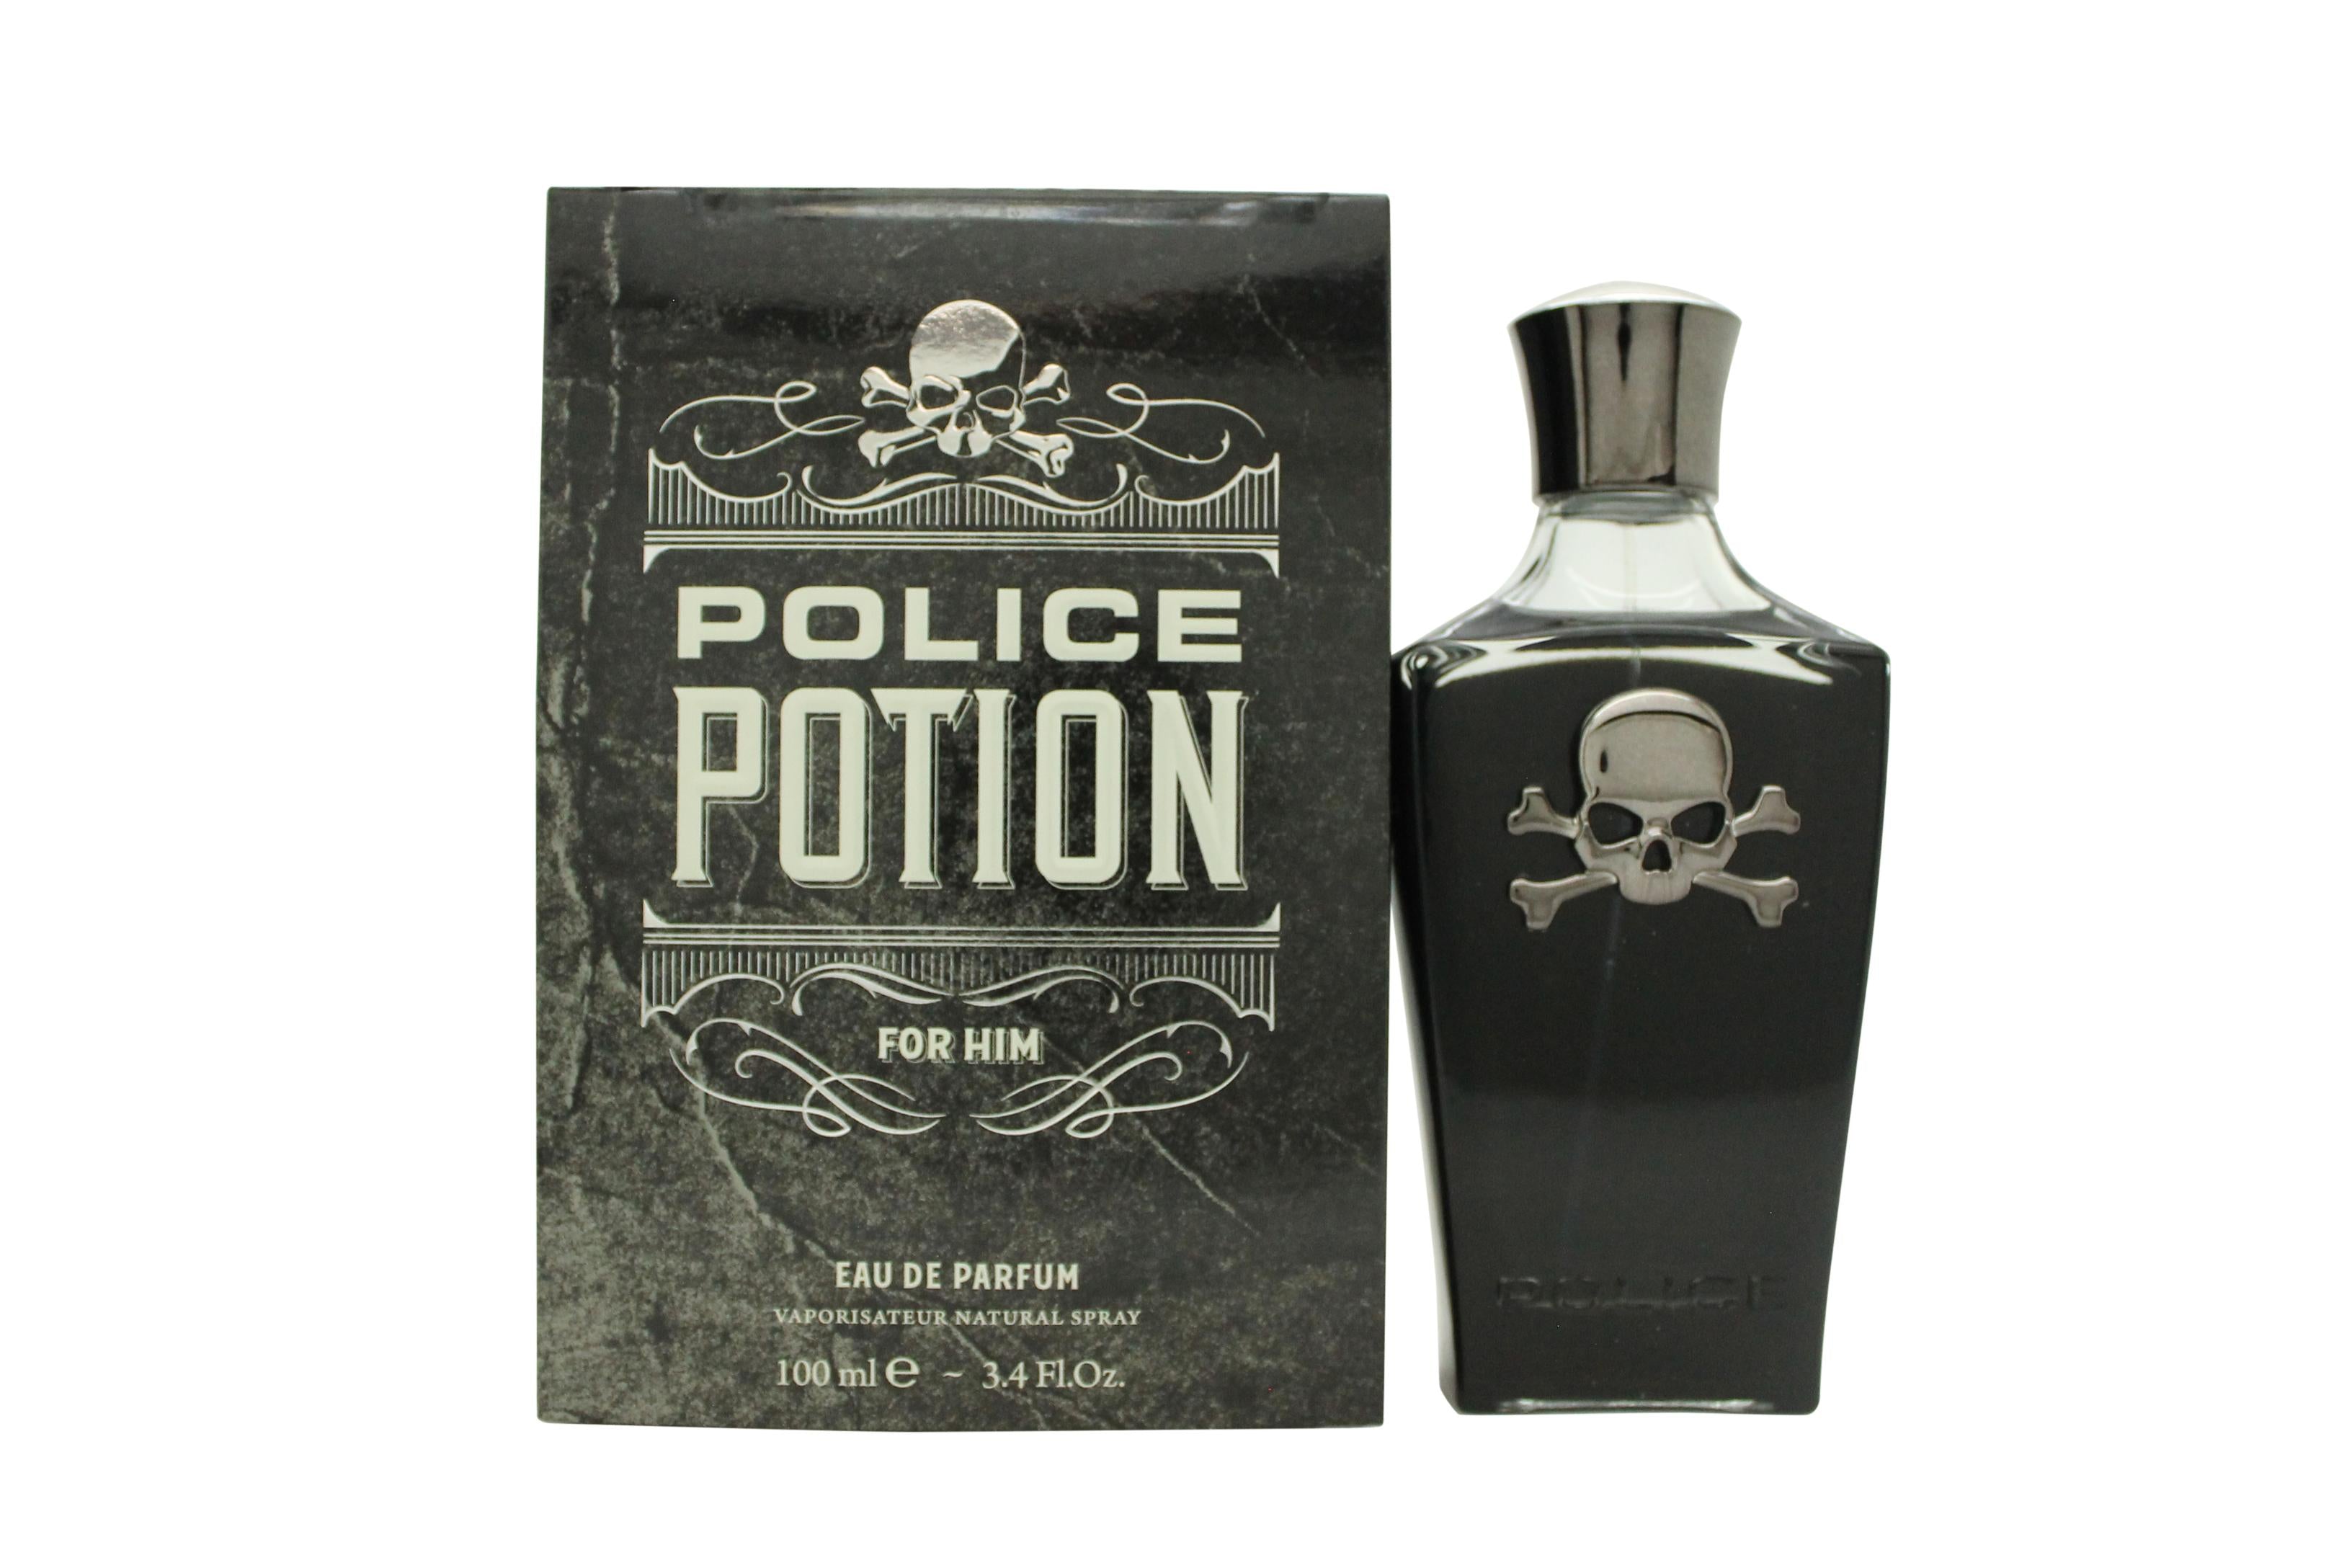 View Police Potion For Him Eau de Parfum 100ml Spray information